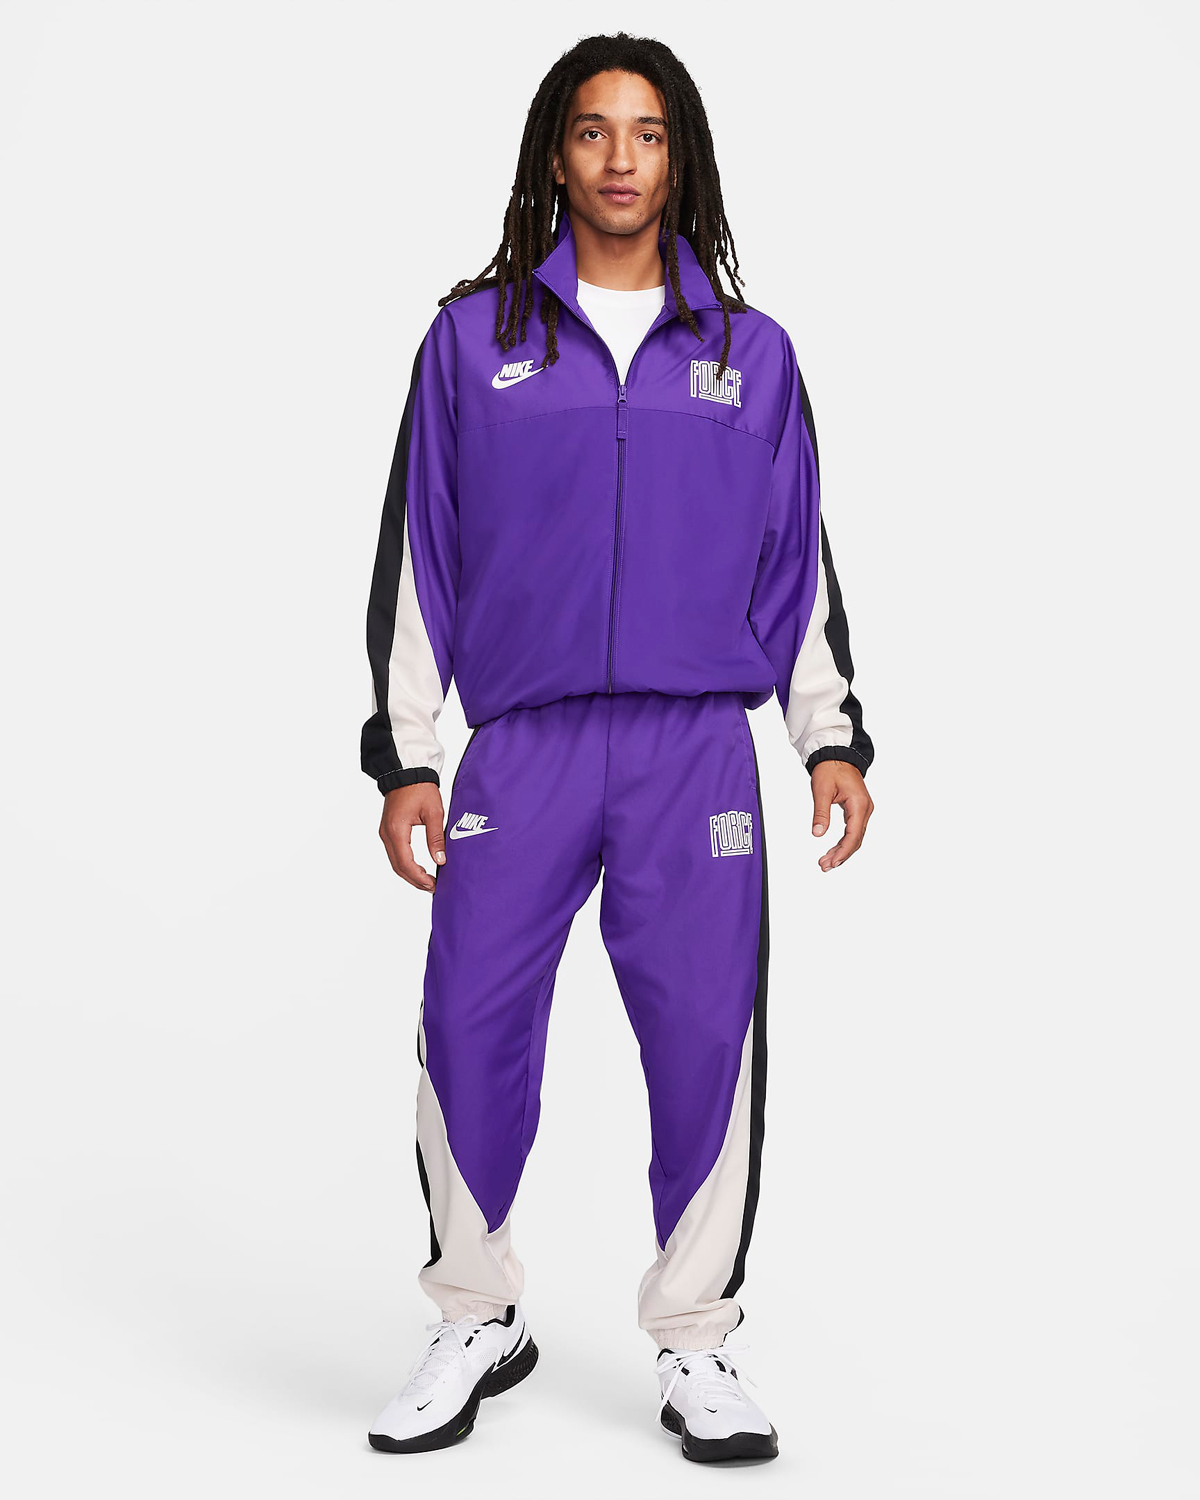 Nike-Starting-5-Jacket-Pants-Field-Purple-Outfit